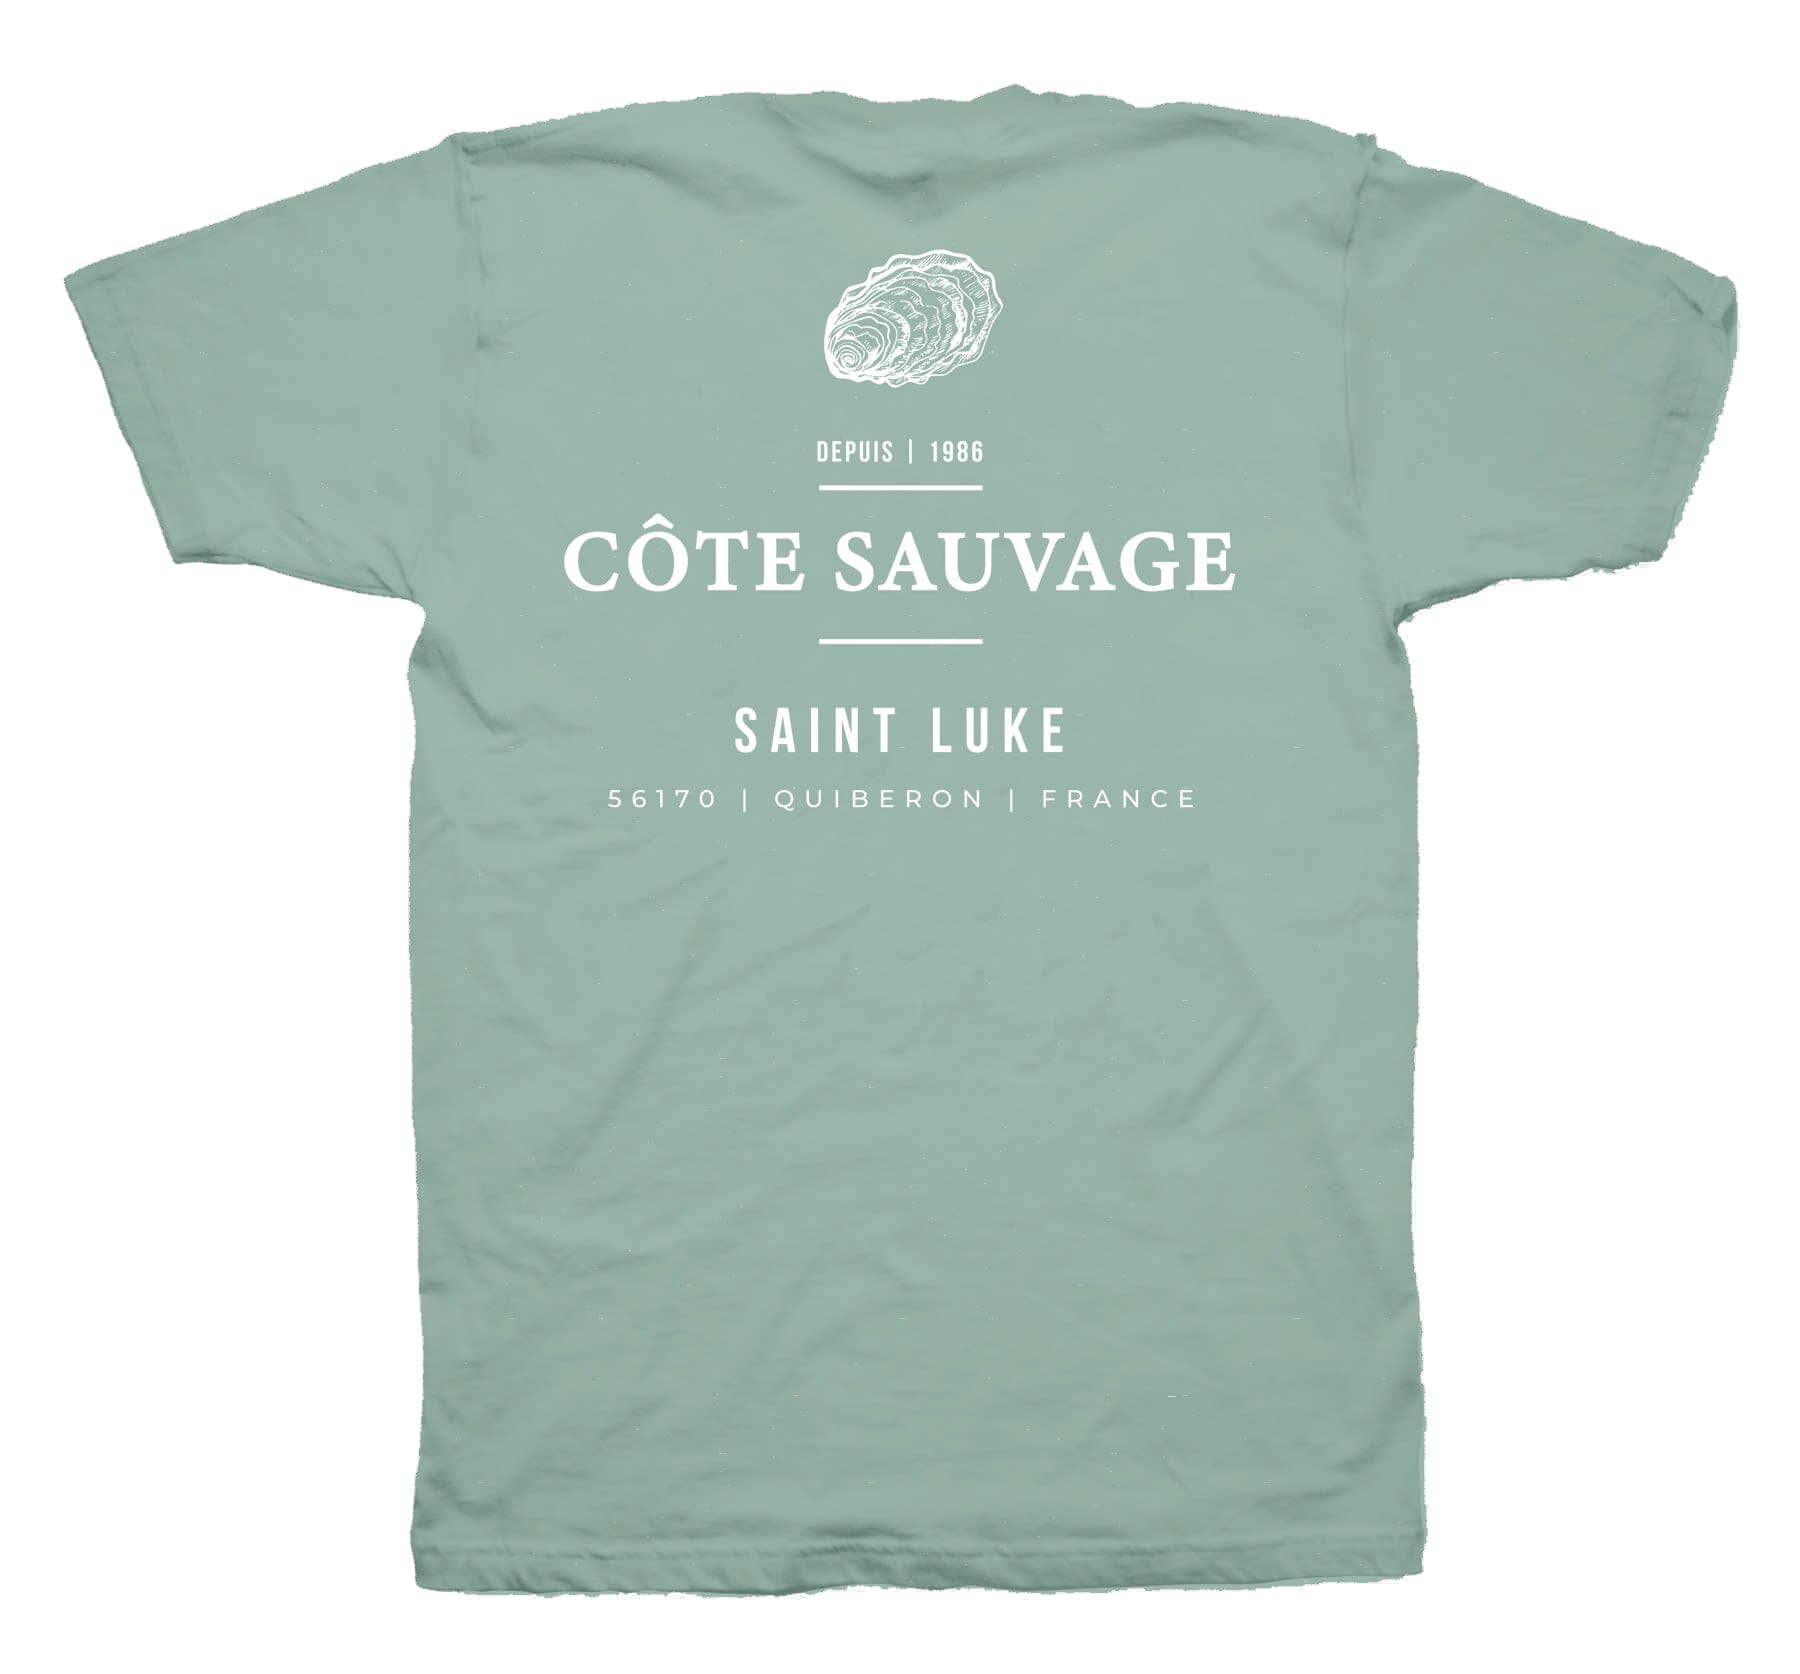 Saint Luke Côte Sauvage T-Shirt in Sage Green